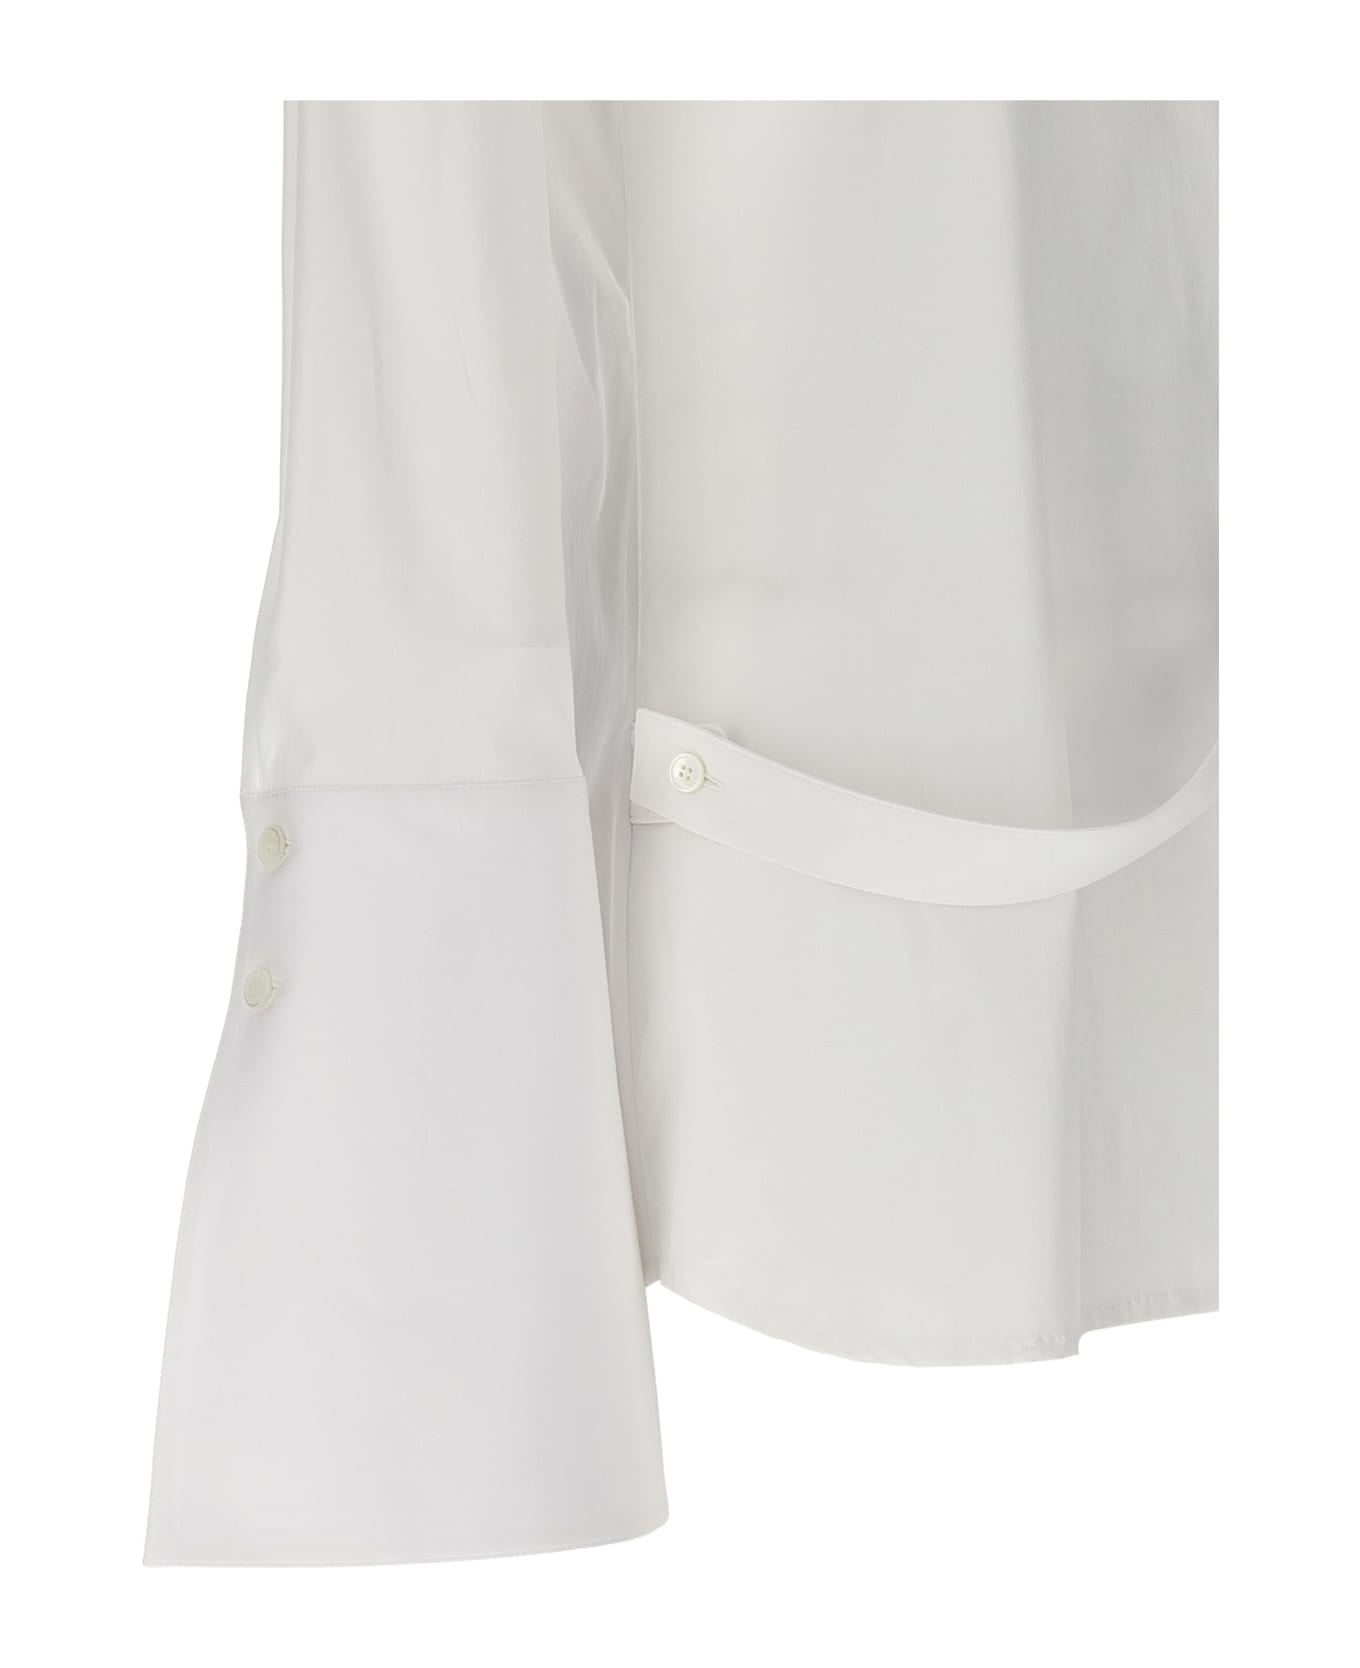 Courrèges Modular Shirt - Bianco シャツ